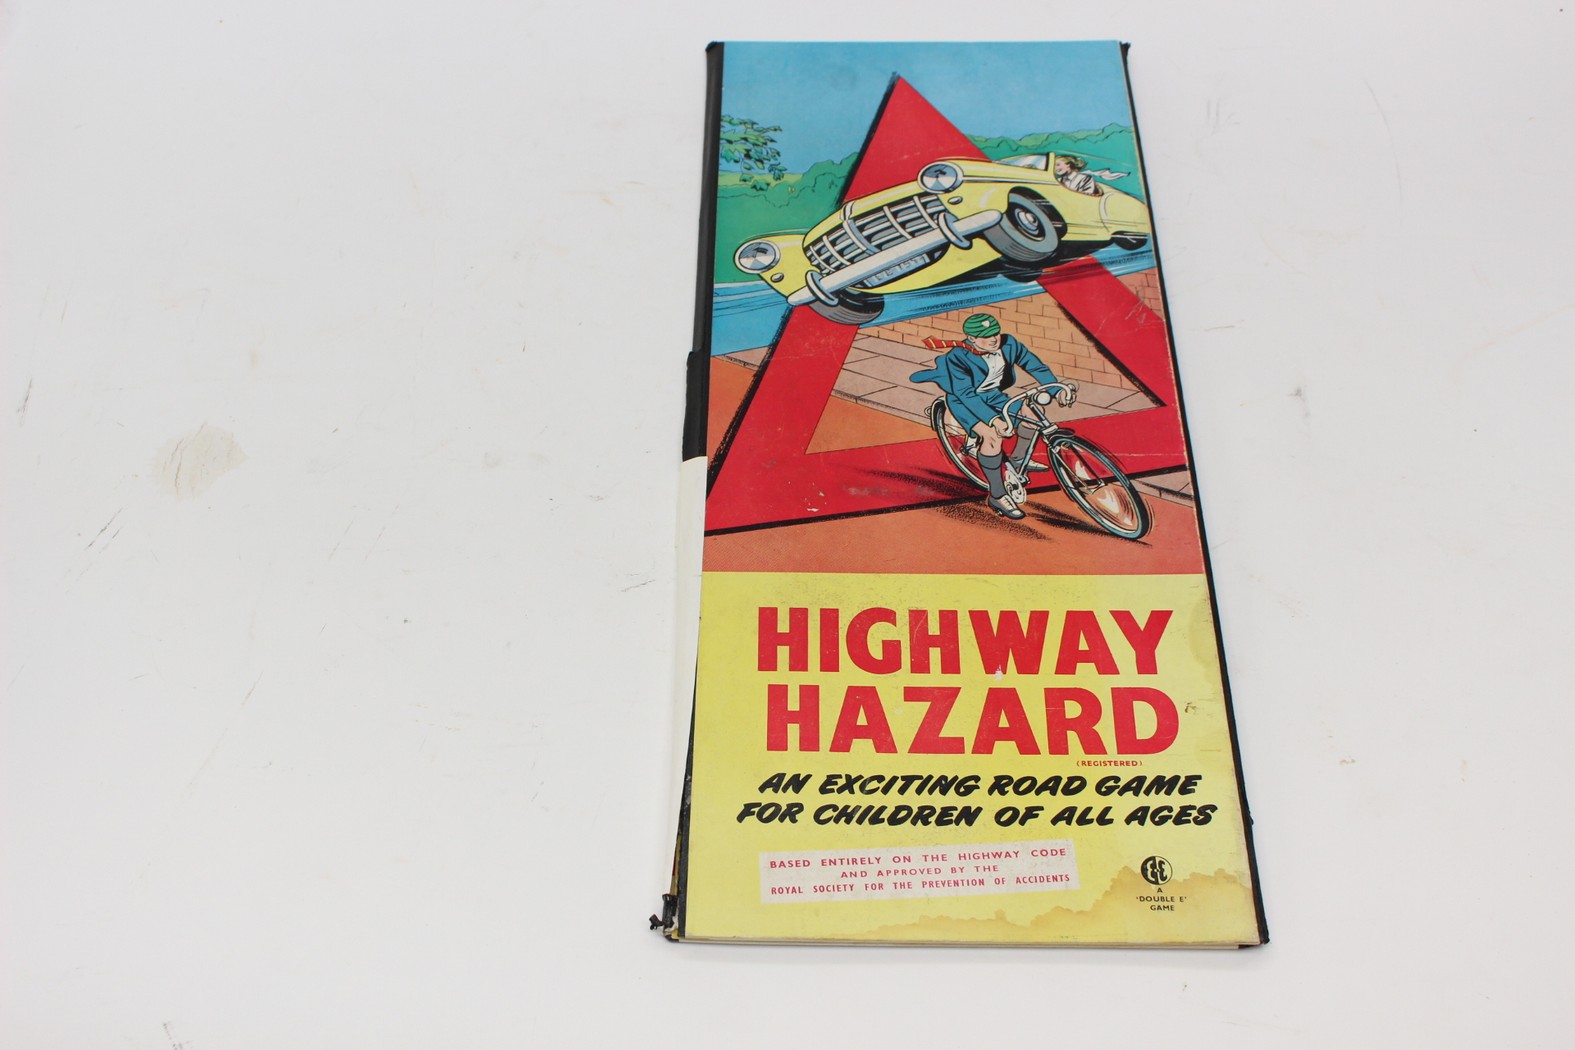 Highway hazard board game